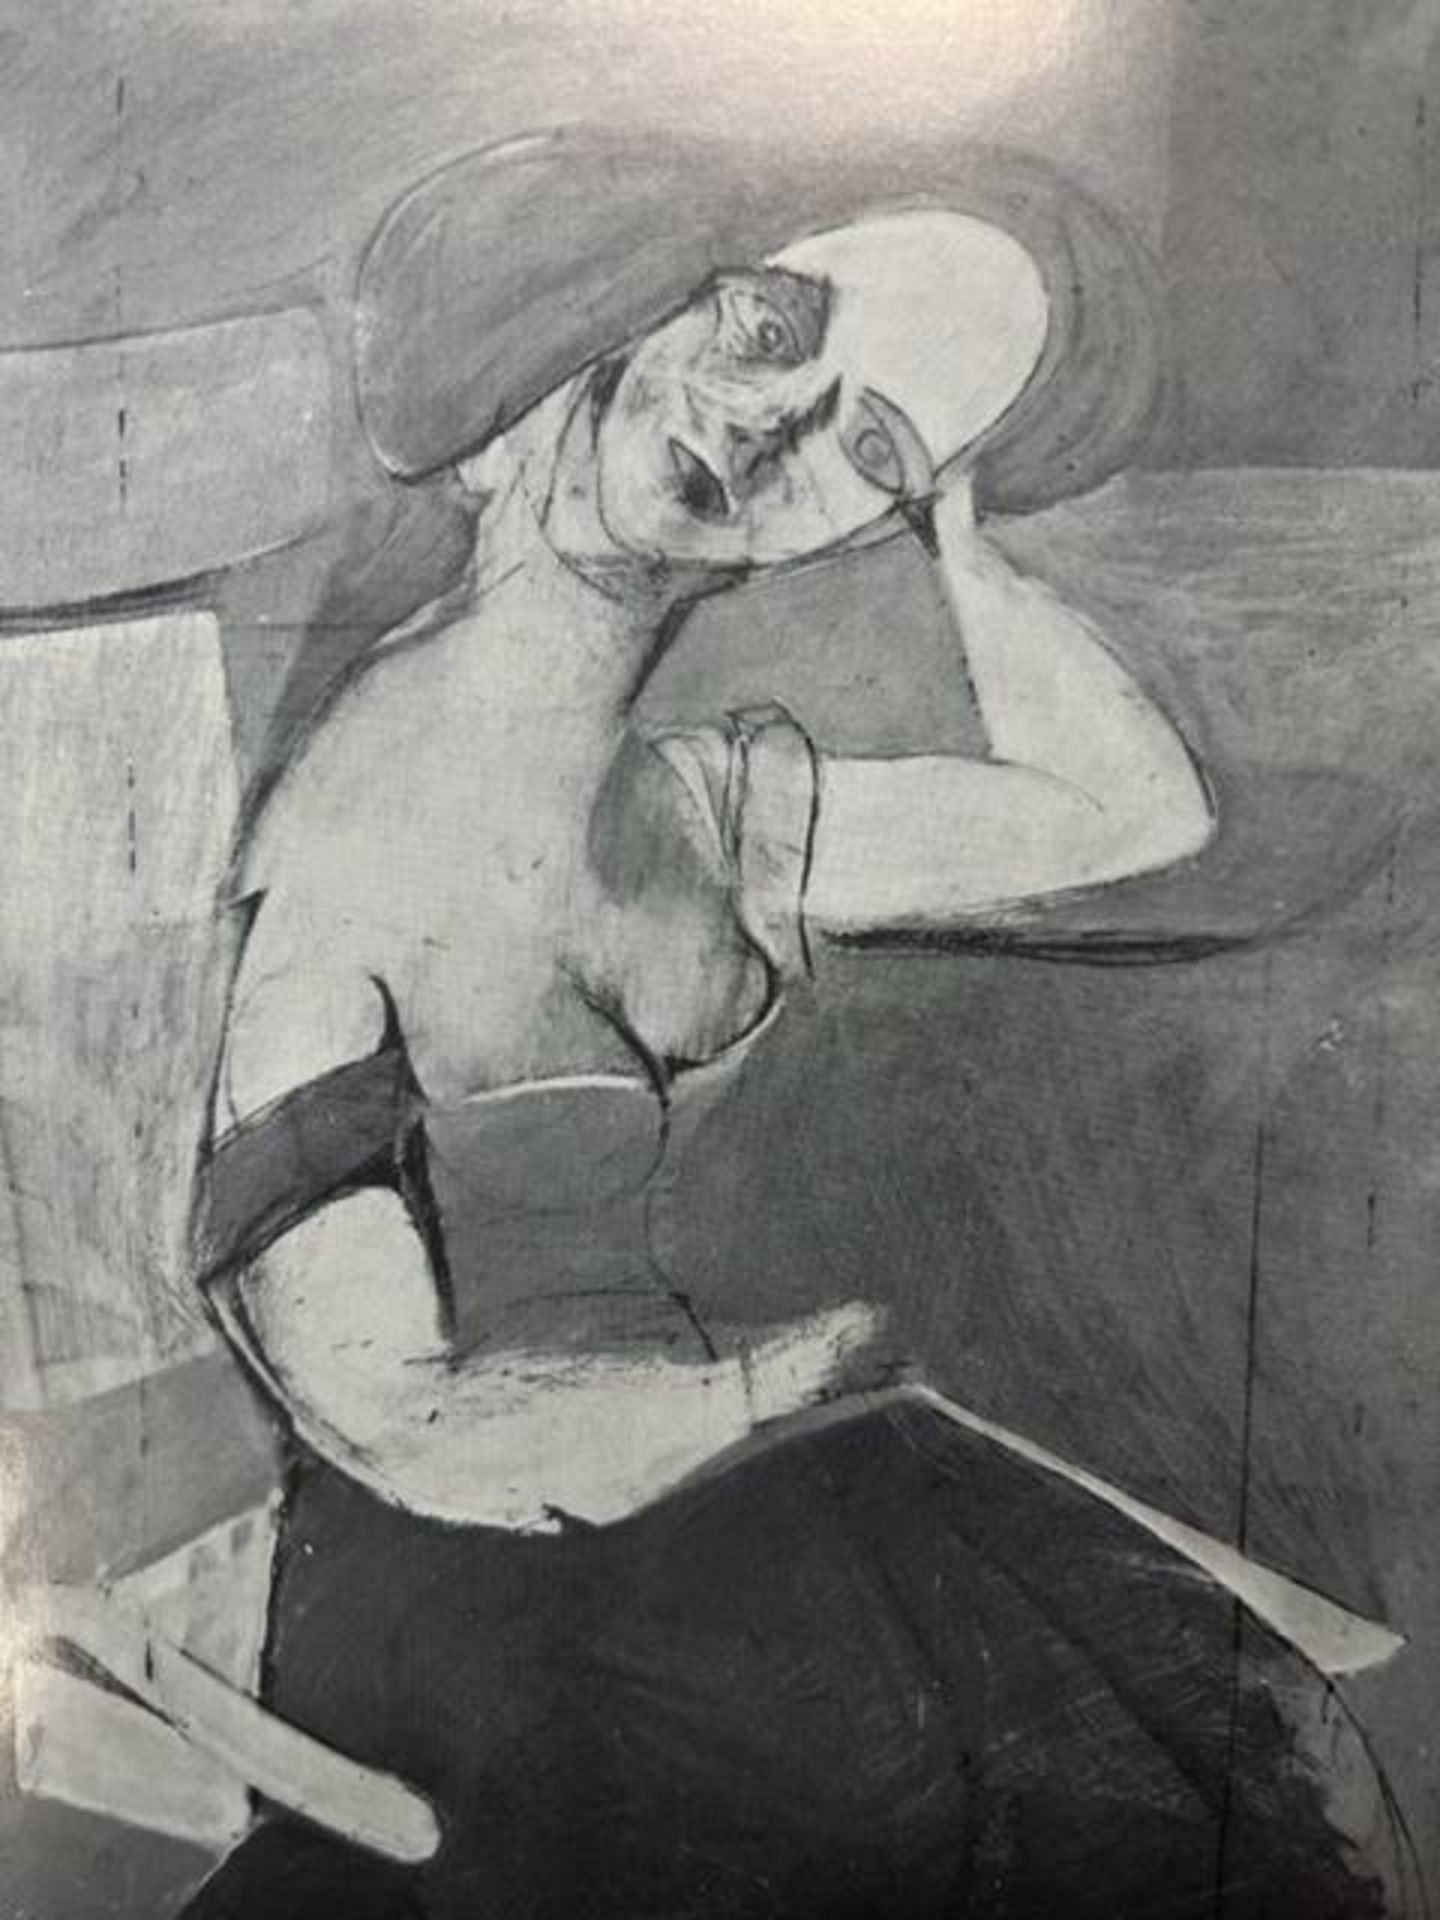 Willem de Kooning "Woman Sitting" Print.